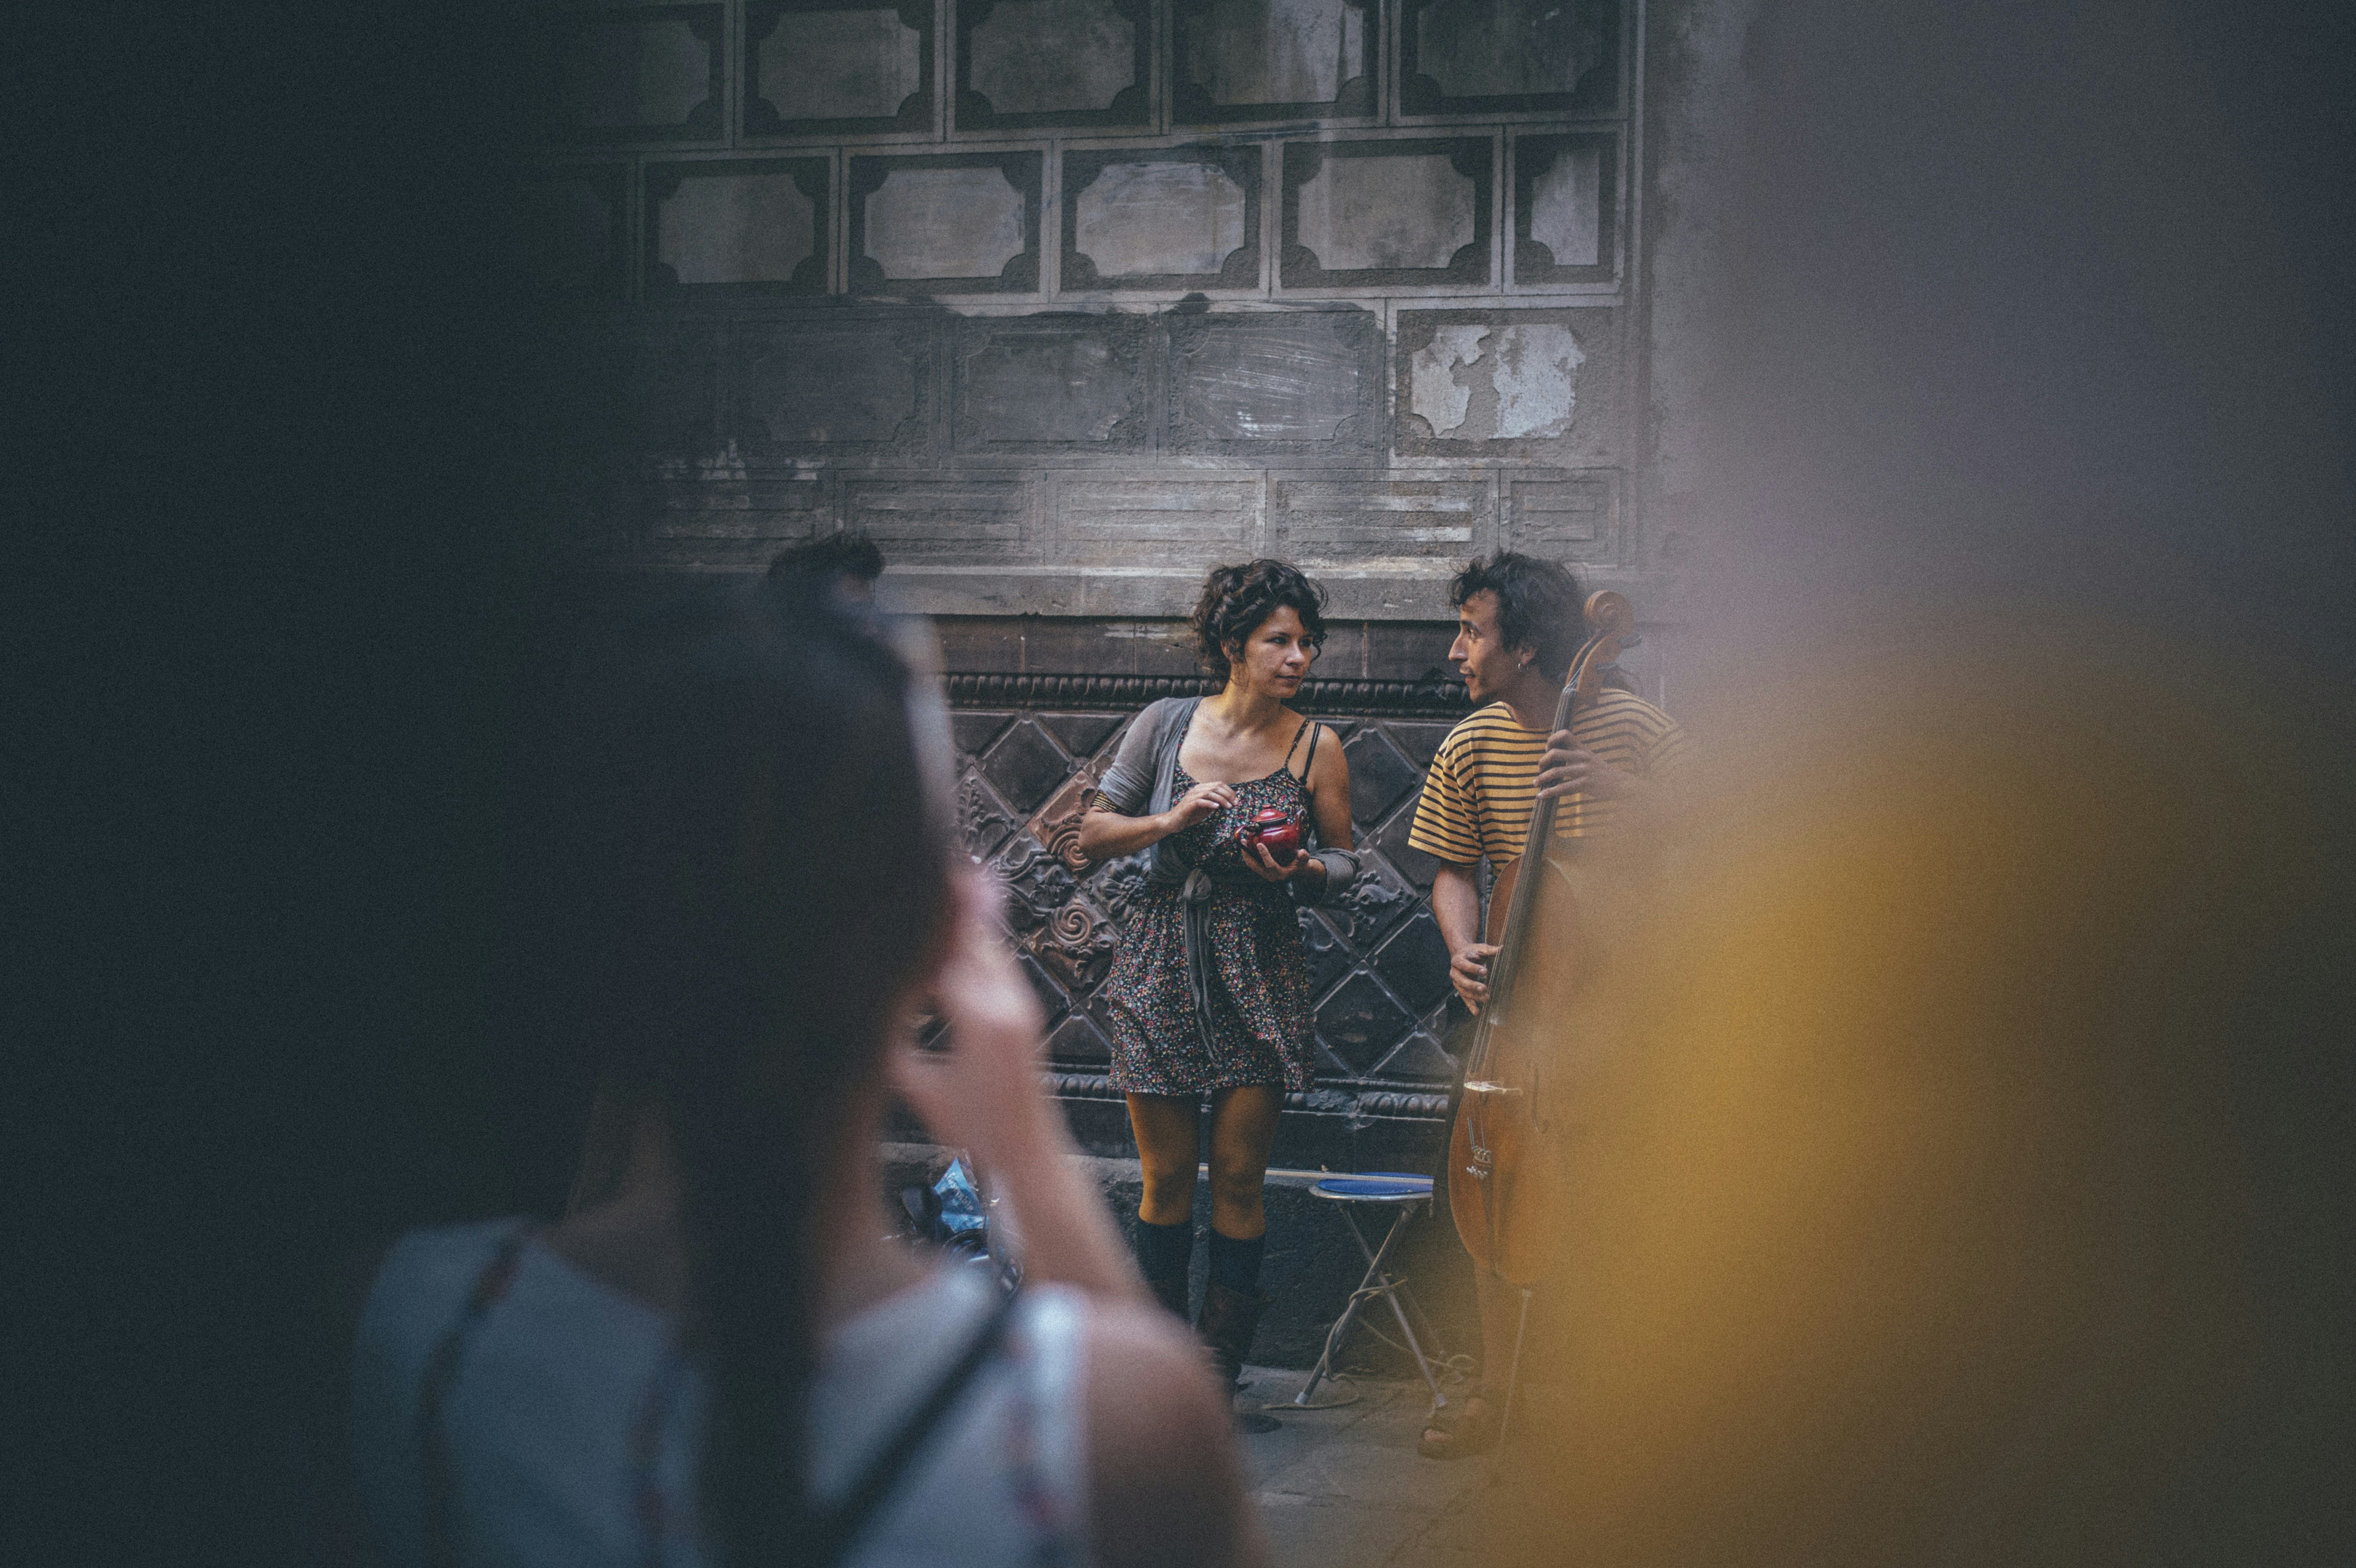 Street musicians in Barcelona.